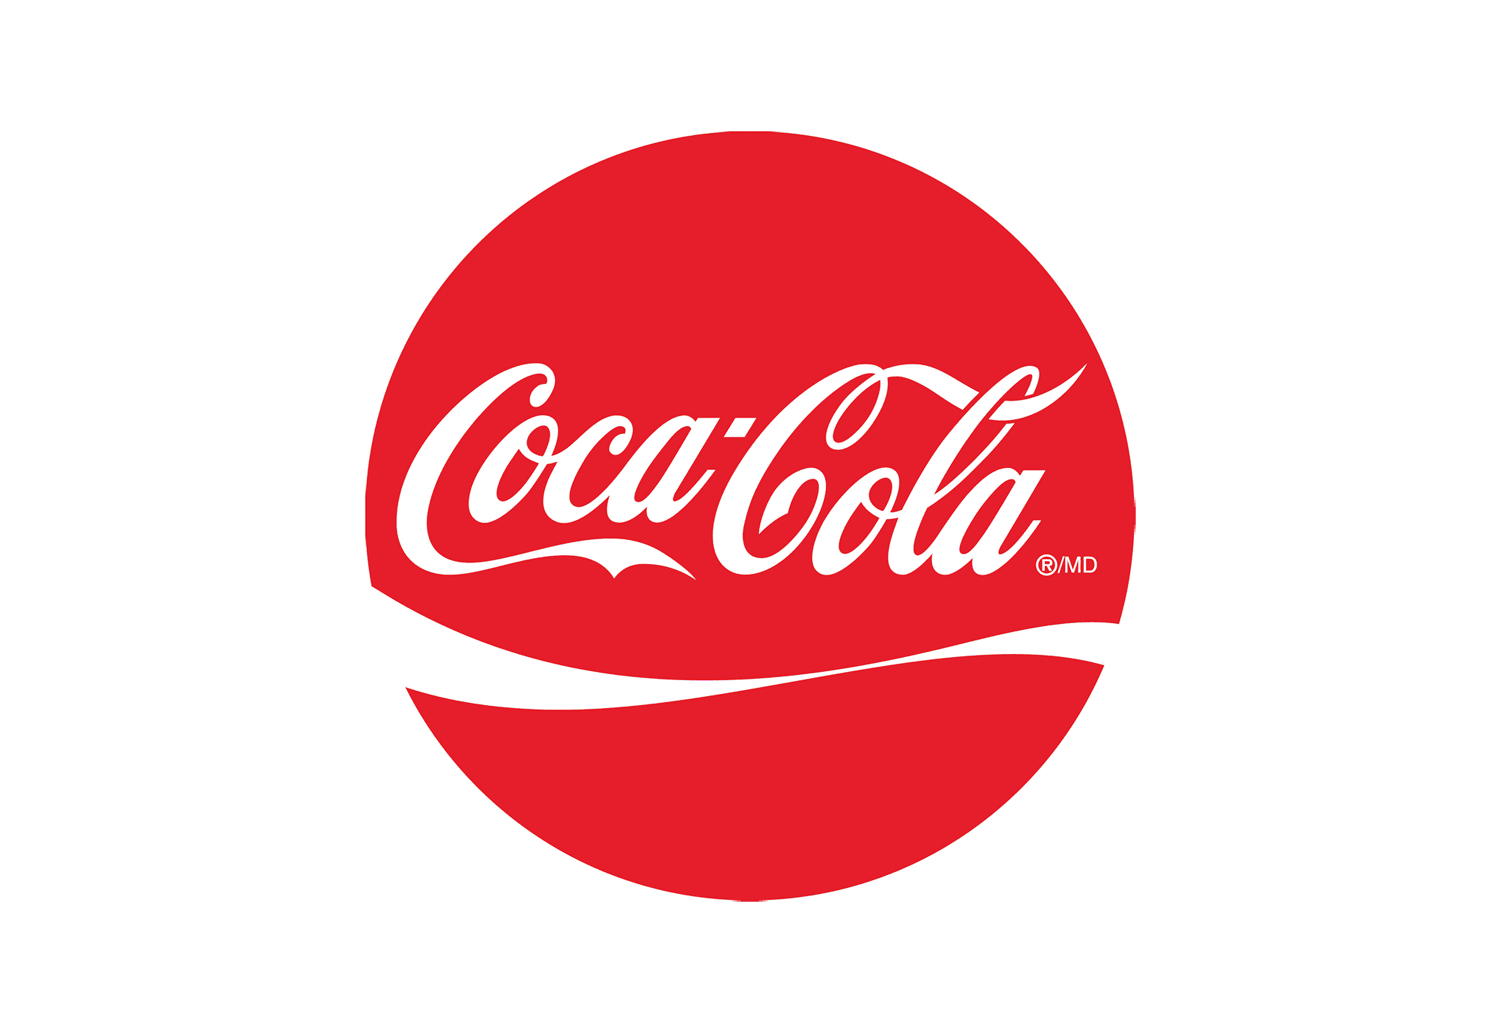 Coke II Logo - Coca-Cola logo | Dwglogo